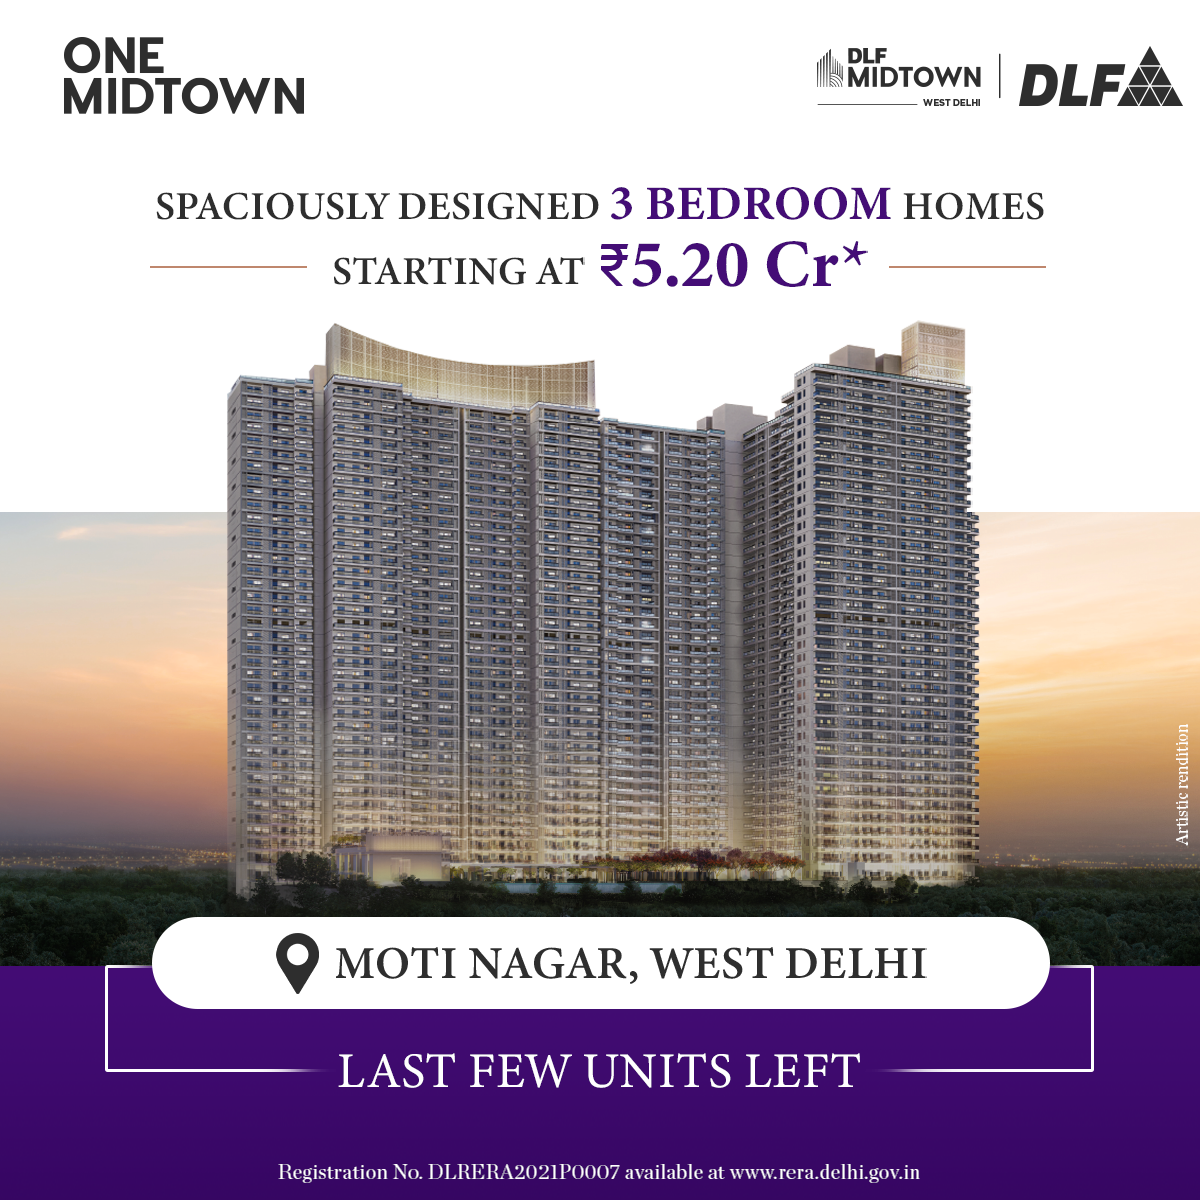 Last few units left at DLF One Midtown, New Delhi Update